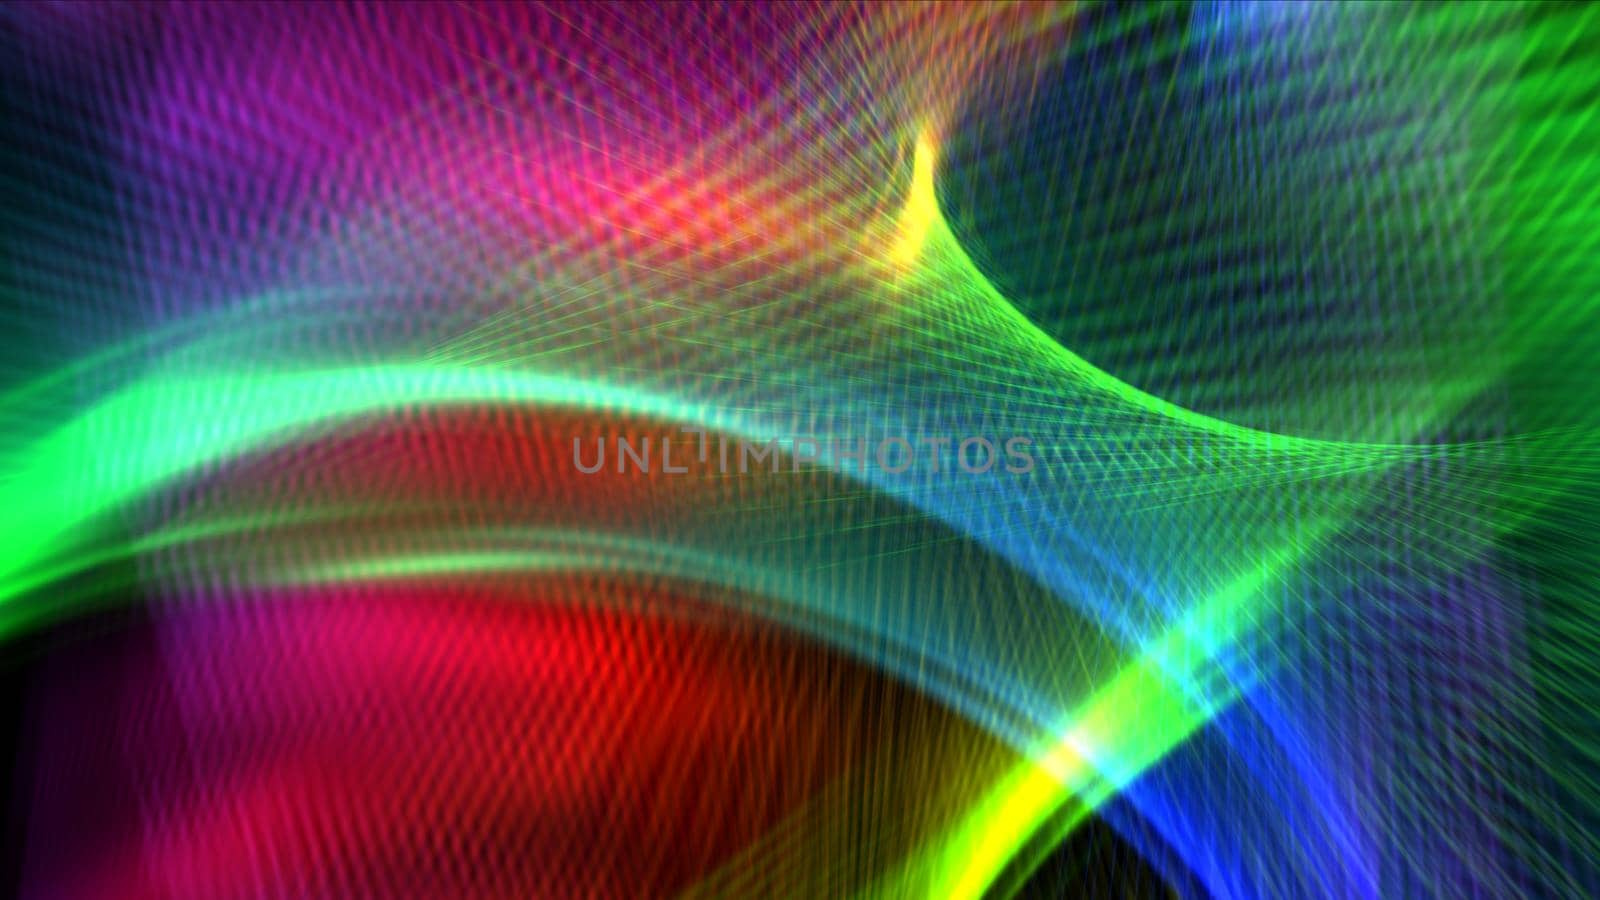 abstract background line light wave colorful illustration render